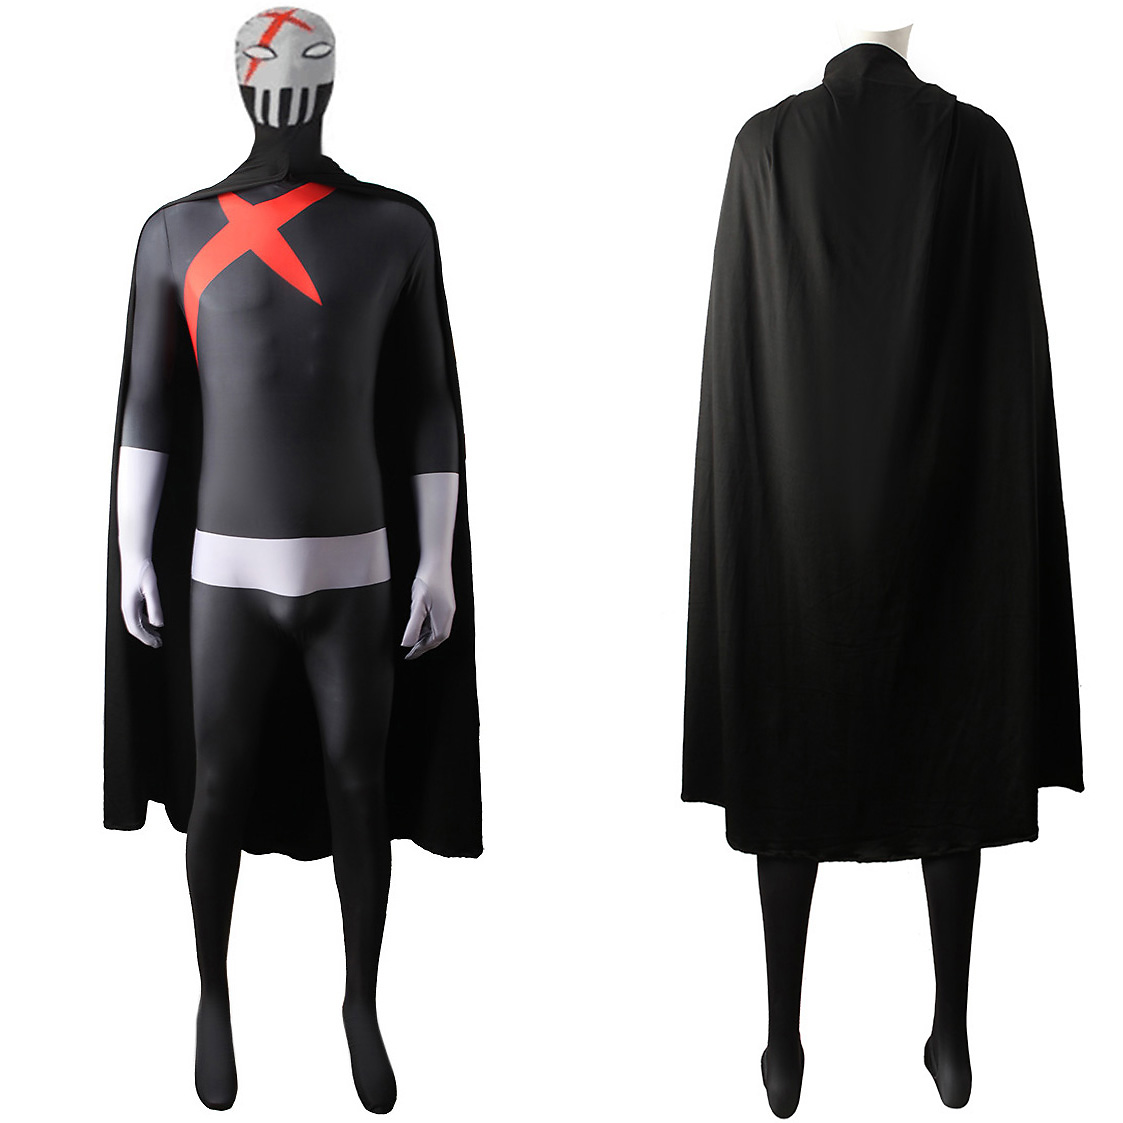 New Comic Boy Titan Red X Hero Einköpfig COS Kostüm Cosplay Halloween BodySuit Outfit Erwachsene/Kinder kreative Strumpfhosen Jumpsuit Outfit